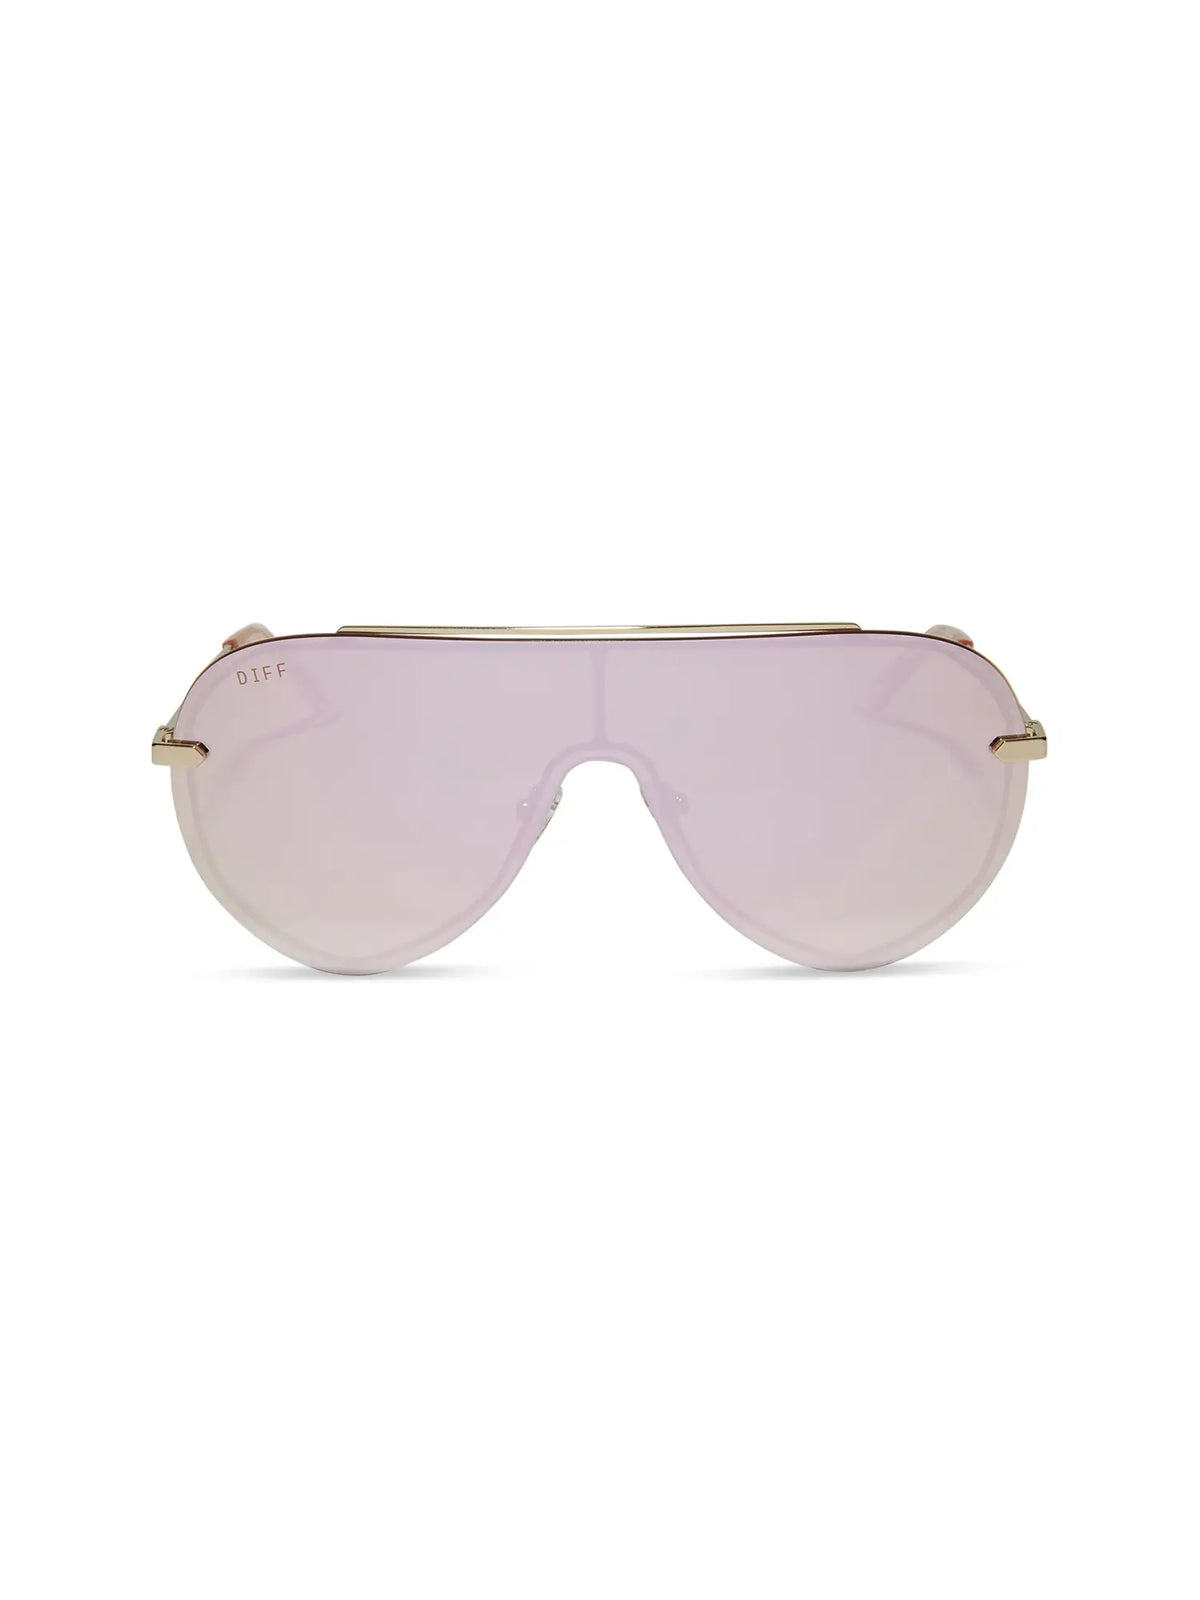 DIFF eyewear imani sunglasses in gold and cherry blossom mirror